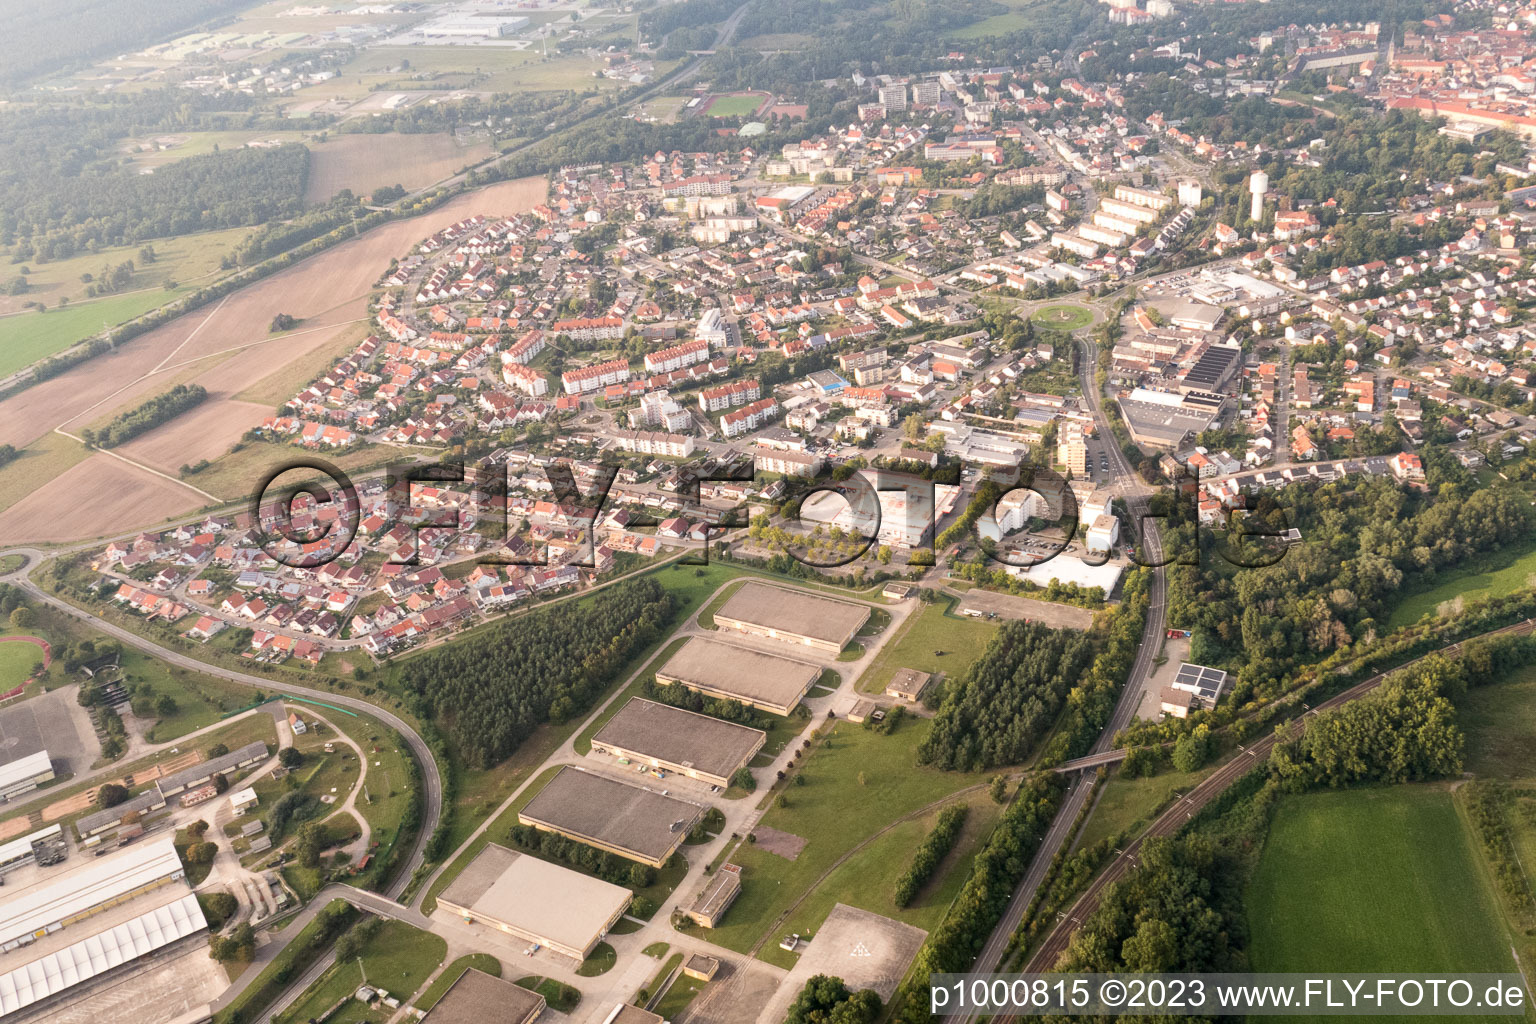 Bird's eye view of Germersheim in the state Rhineland-Palatinate, Germany